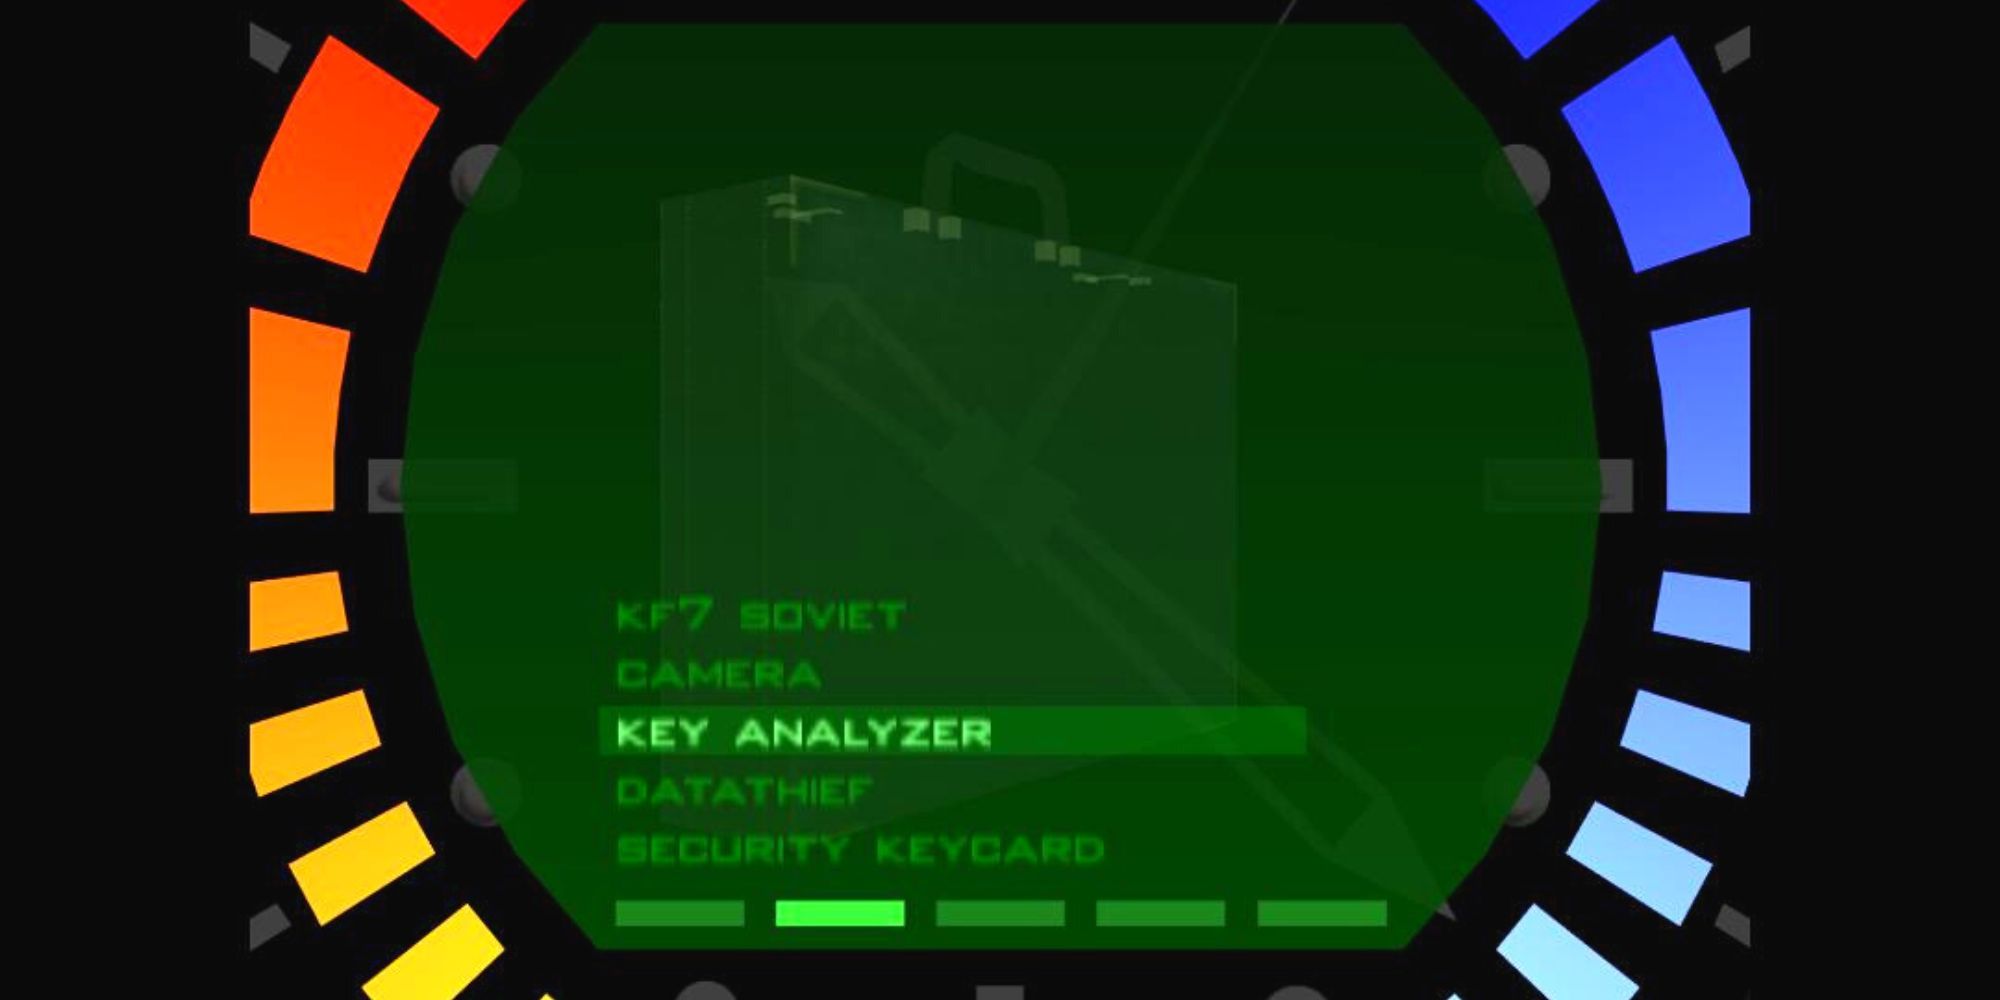 Key Analyzer in Bond's watch inventory in Bunker 1 mission Goldeneye 007